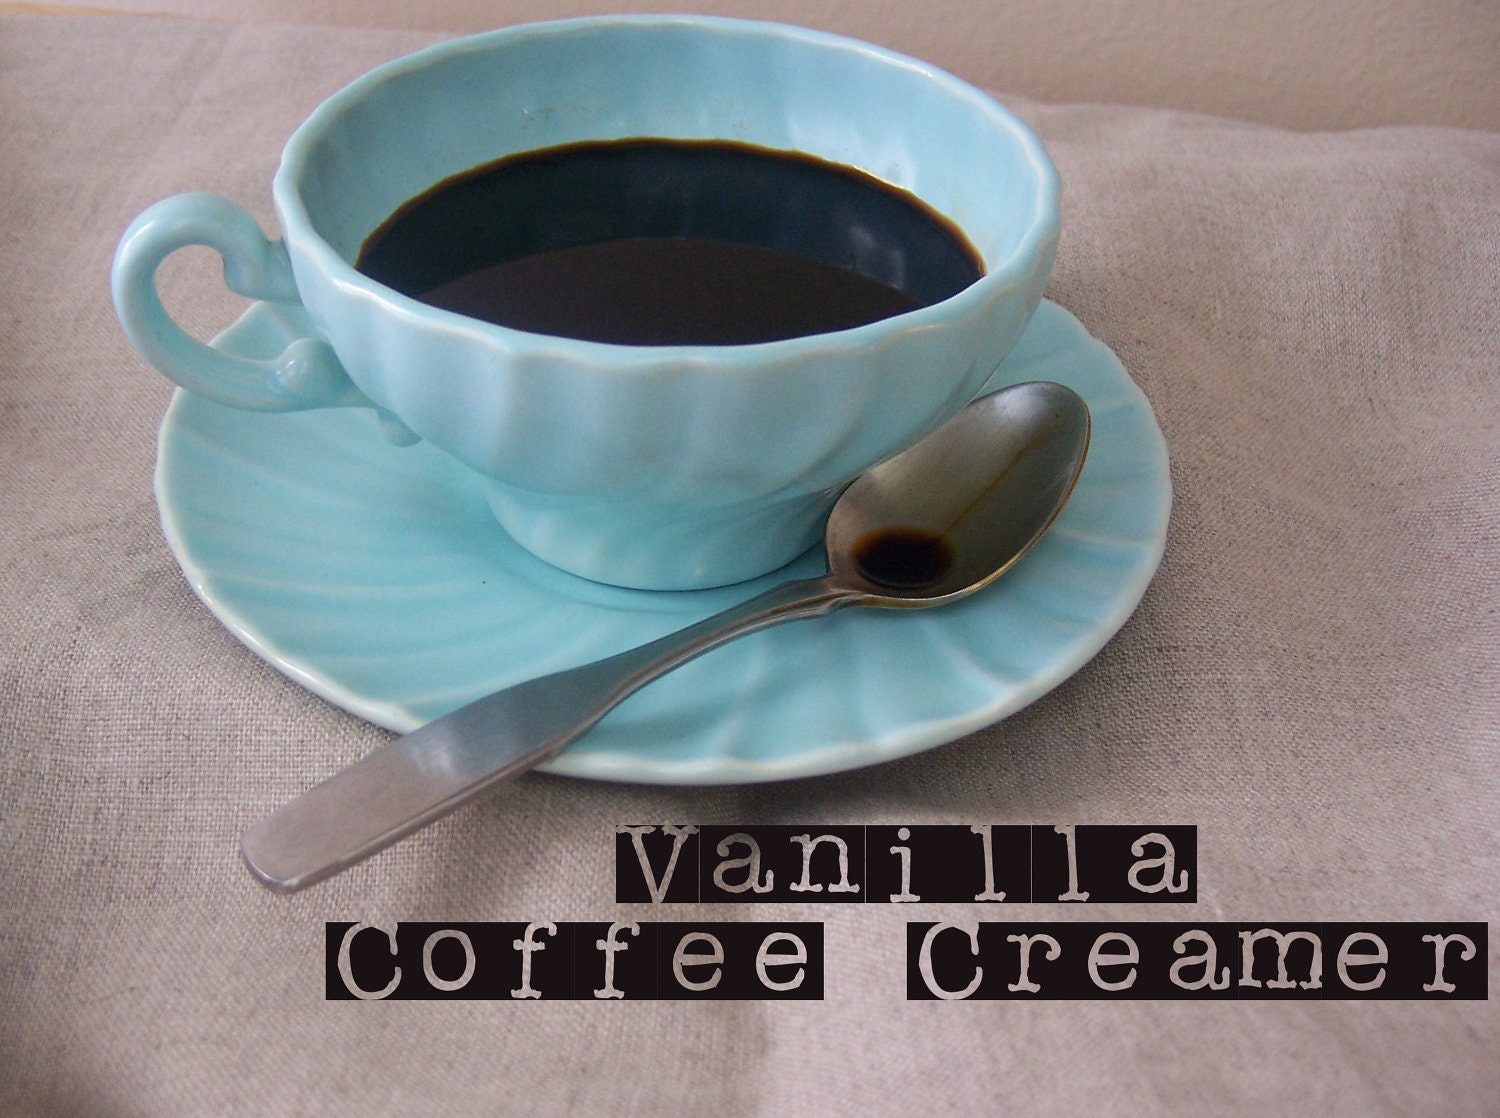 Vanilla Coffee Creamer (8oz package)